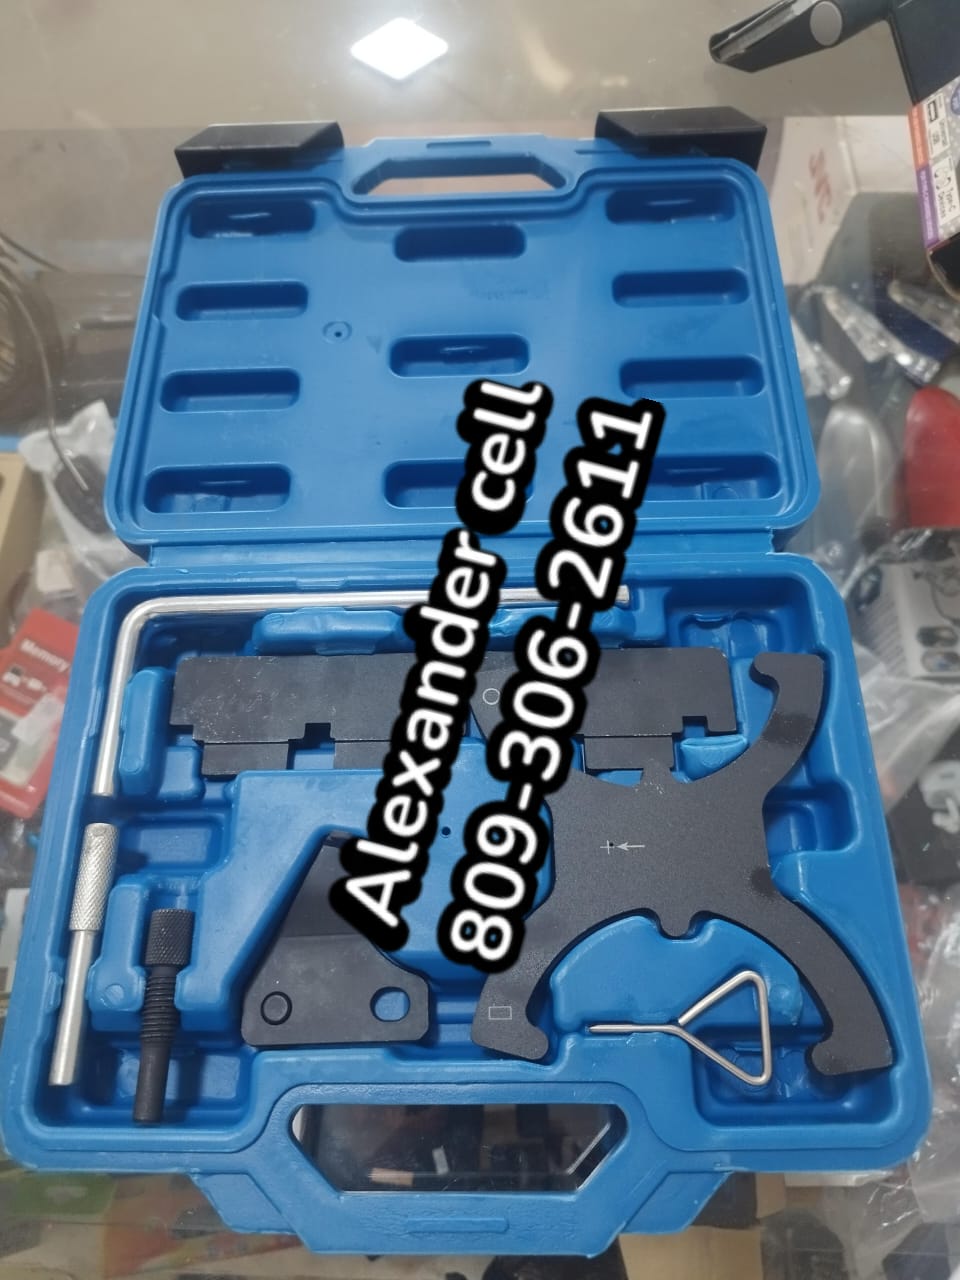 Herramientas de sincronización de motor Ford kit paa modelos 1.6 TI-VC Foto 7211816-4.jpg